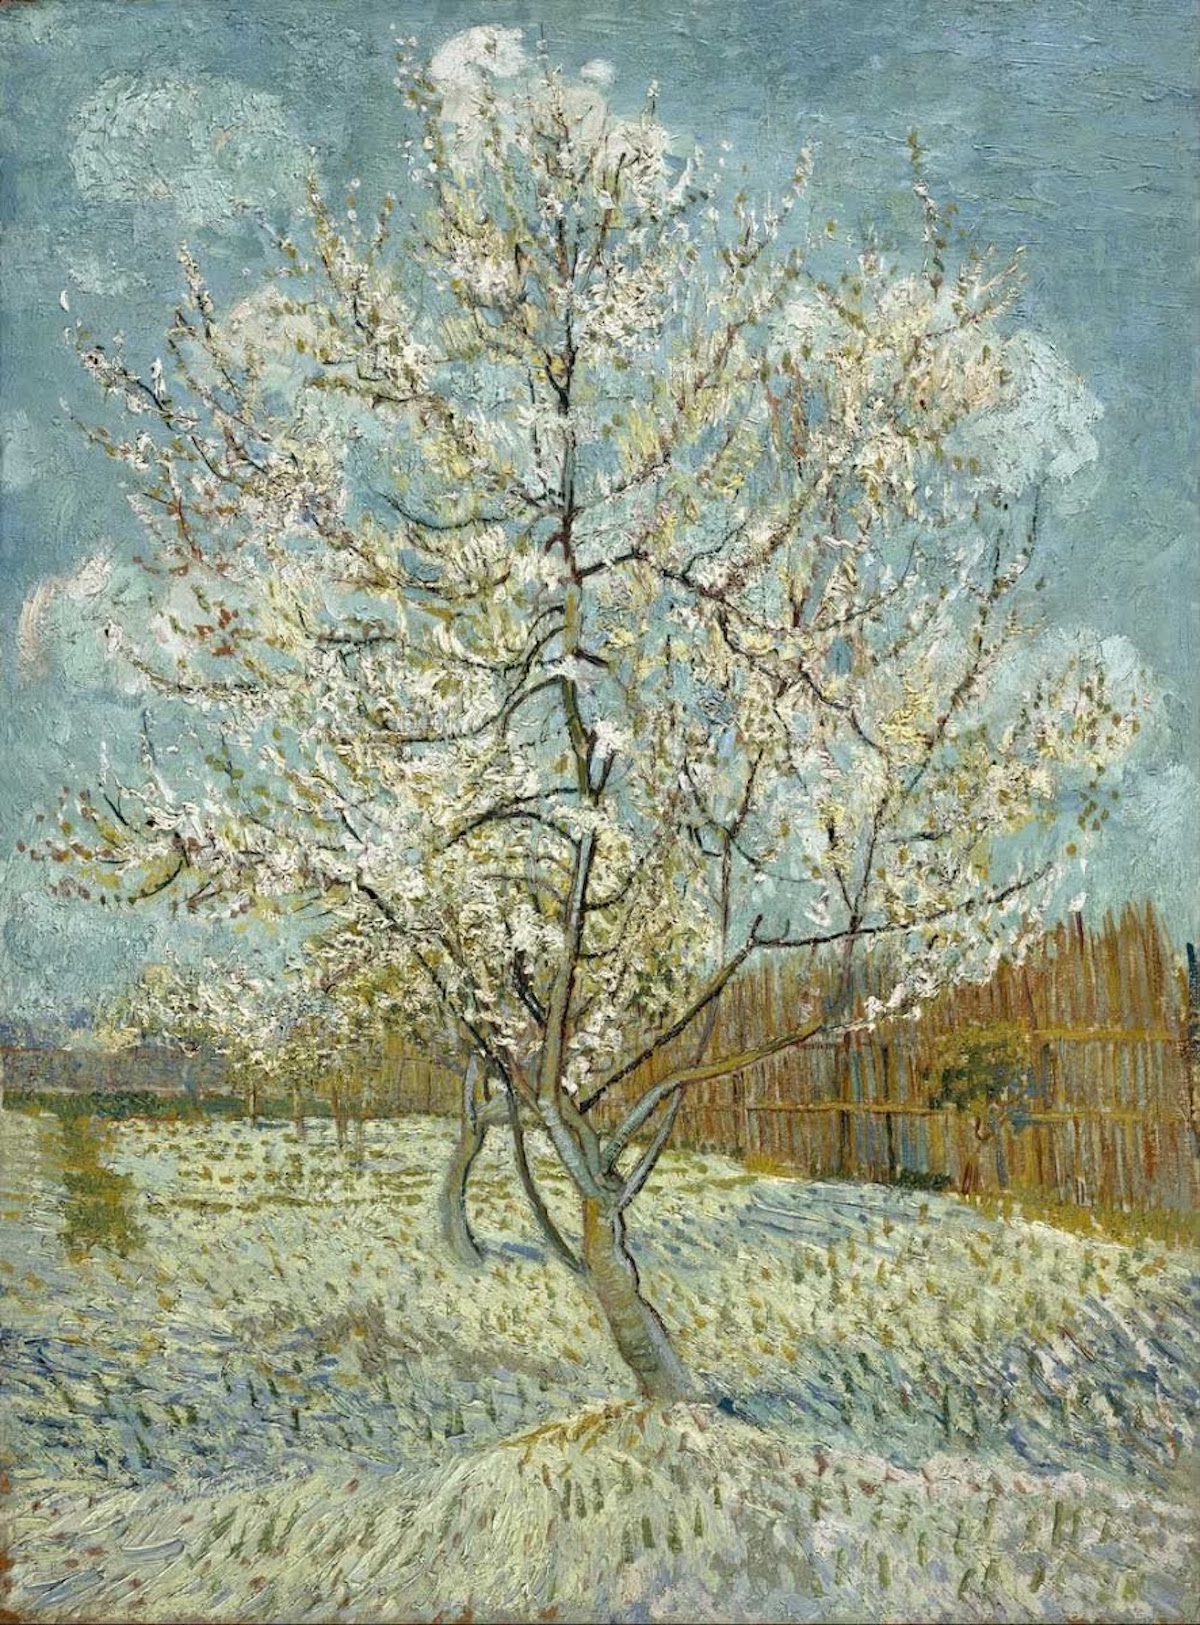 粉紅桃樹 by Vincent van Gogh - 1888 - 80.9 x 60.2 cm 